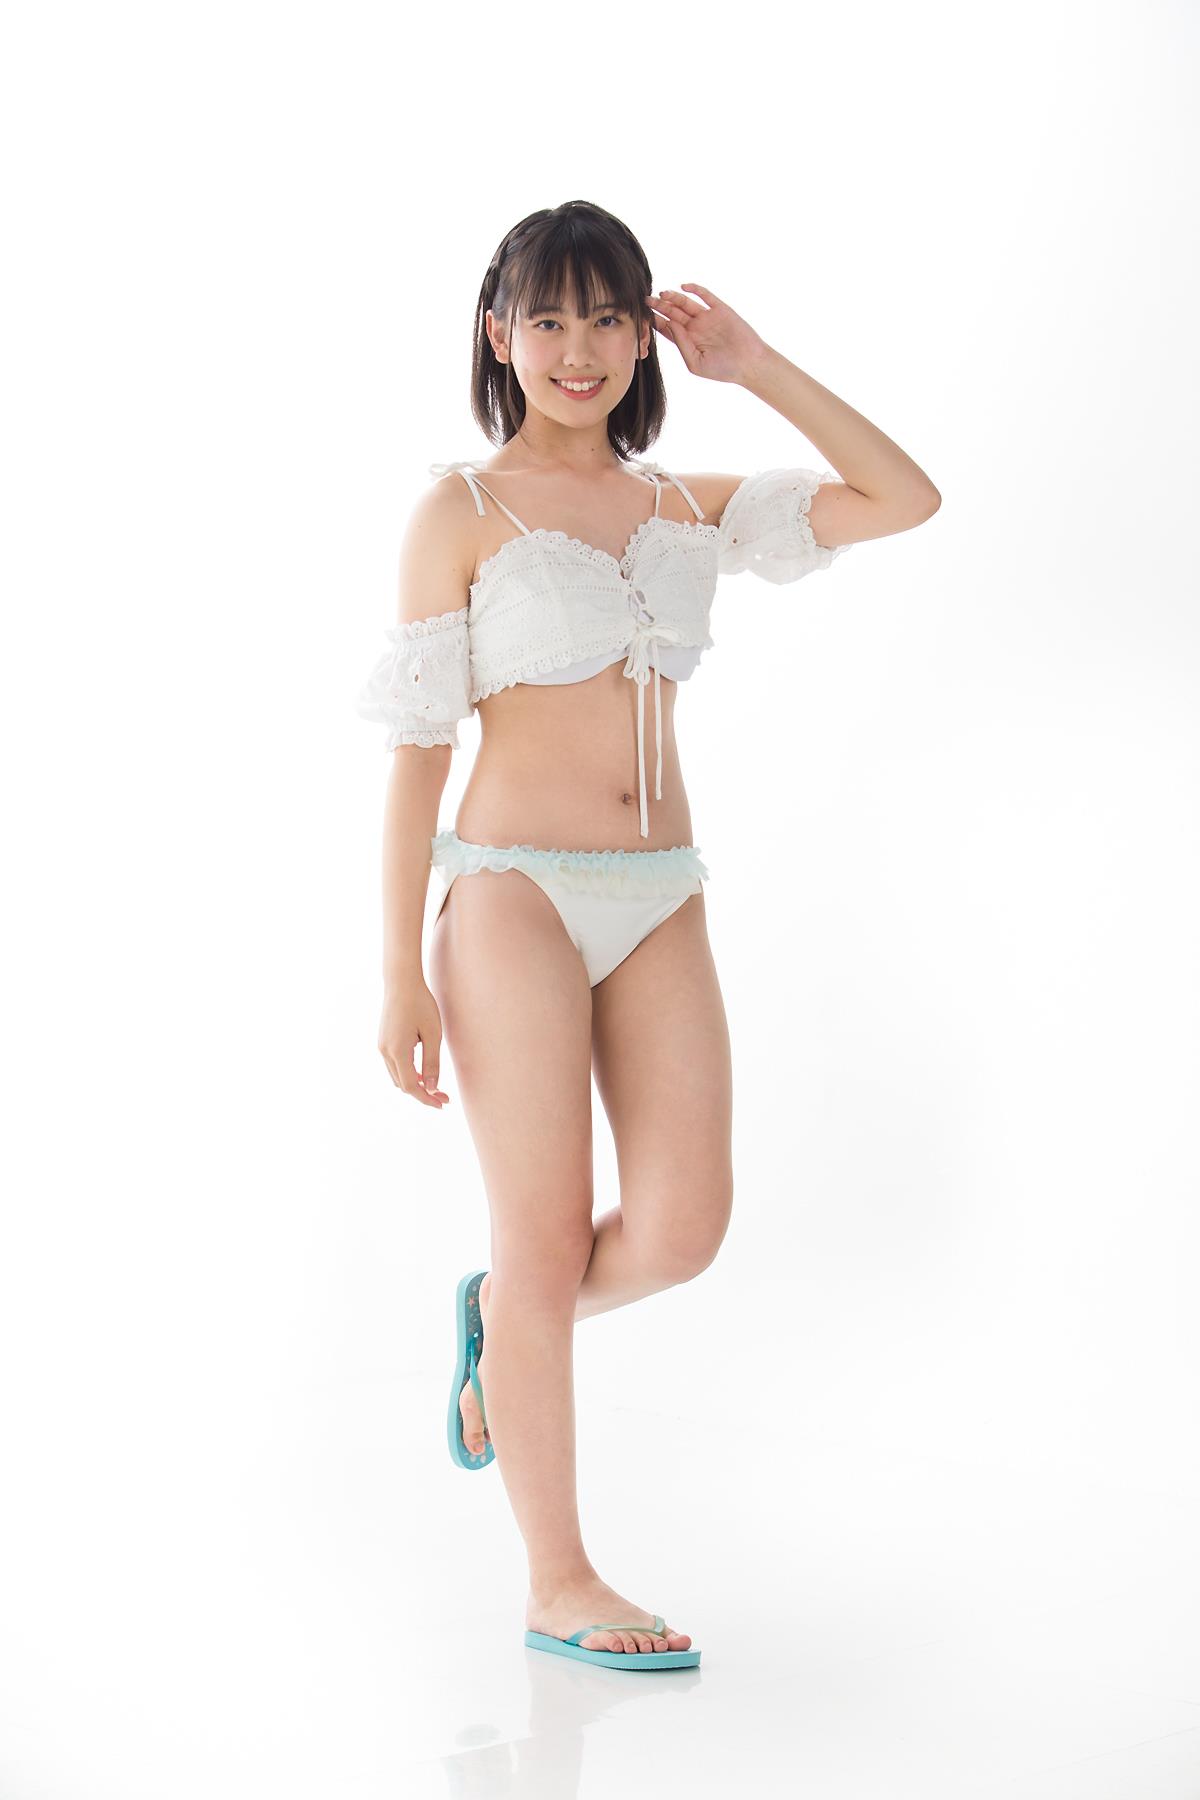 Minisuka.tv Sarina Kashiwagi 柏木さりな Premium Gallery 2.6 - 18.jpg